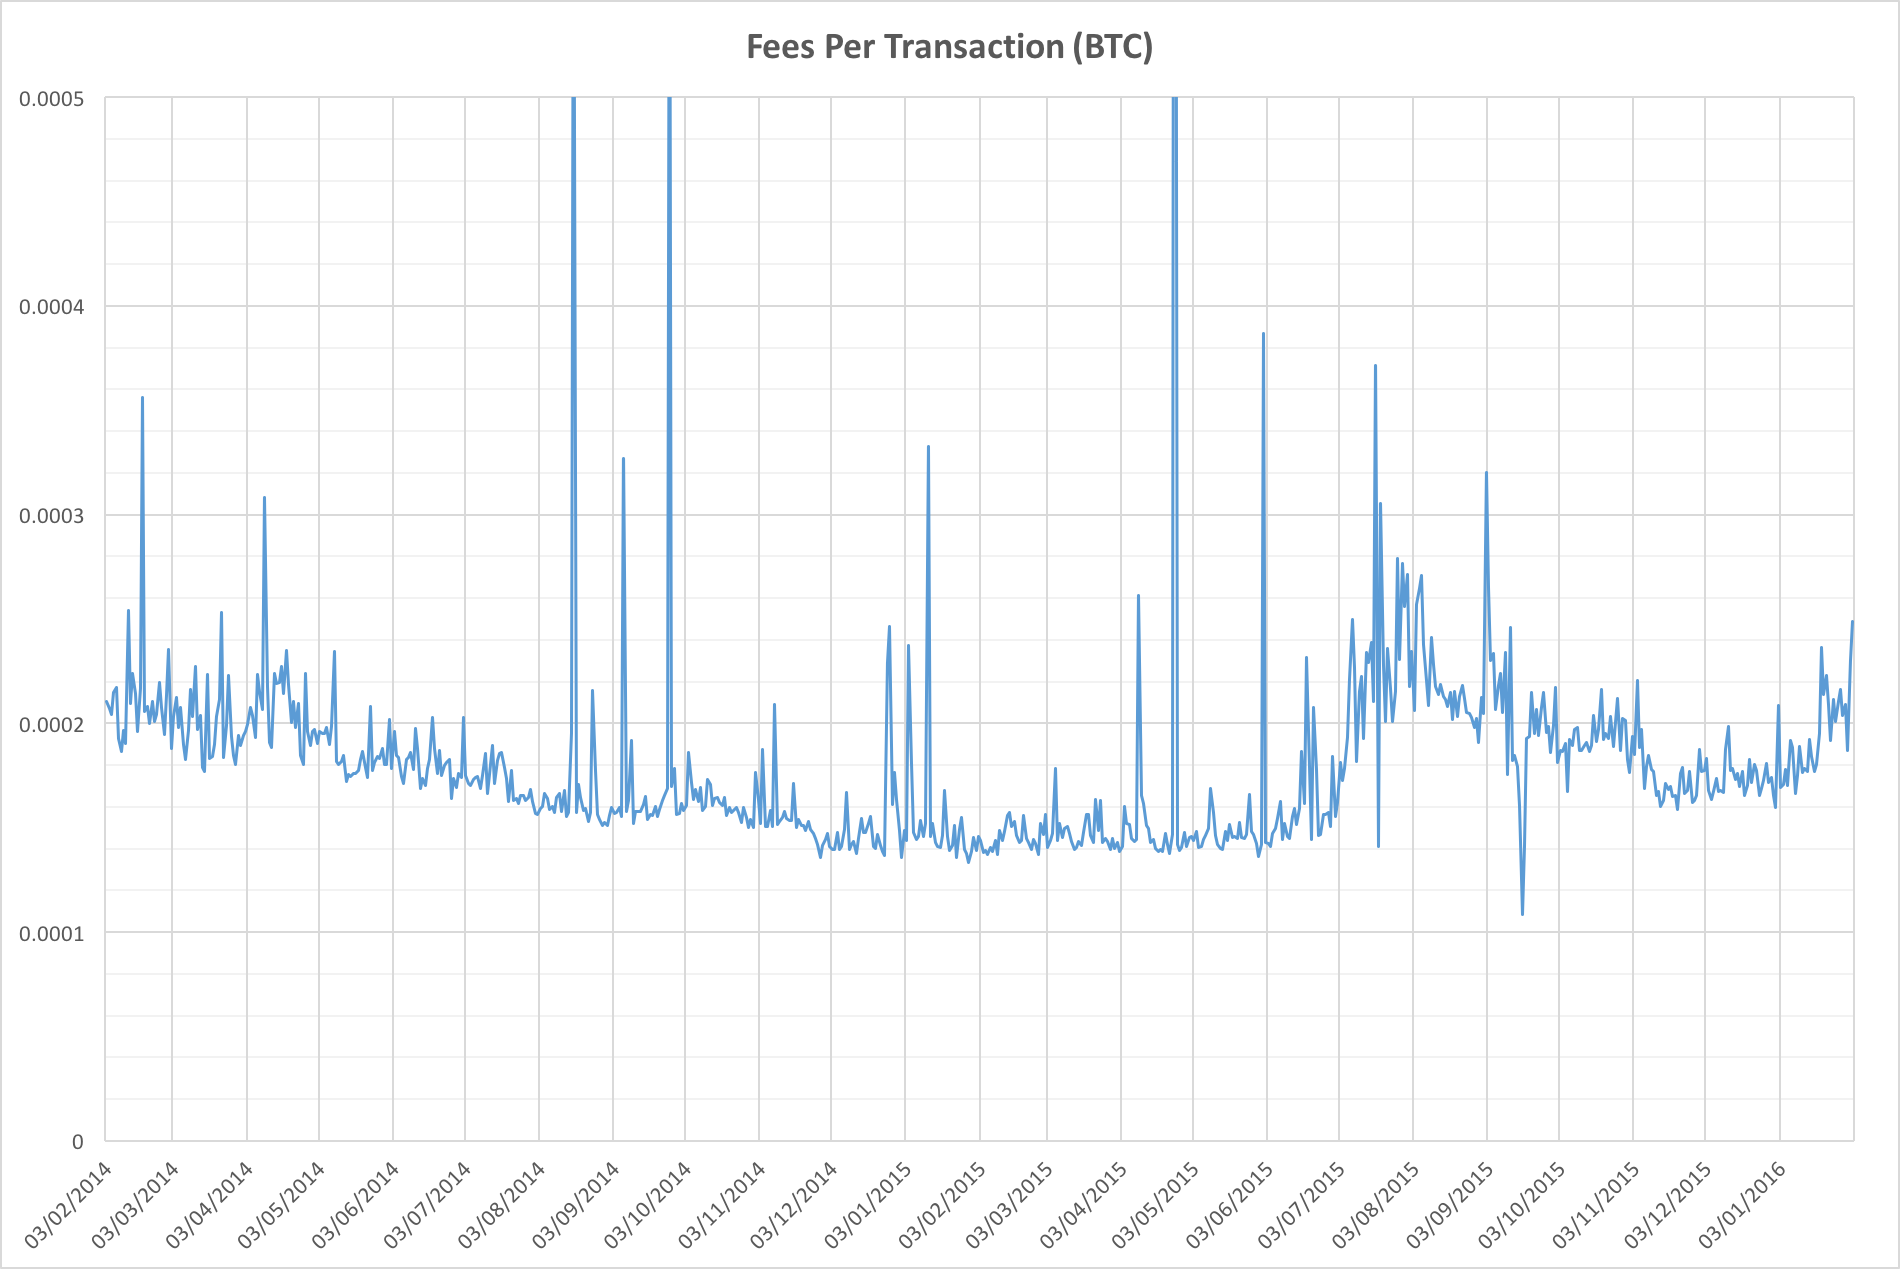 Fees per Bitcoin transaction in BTC